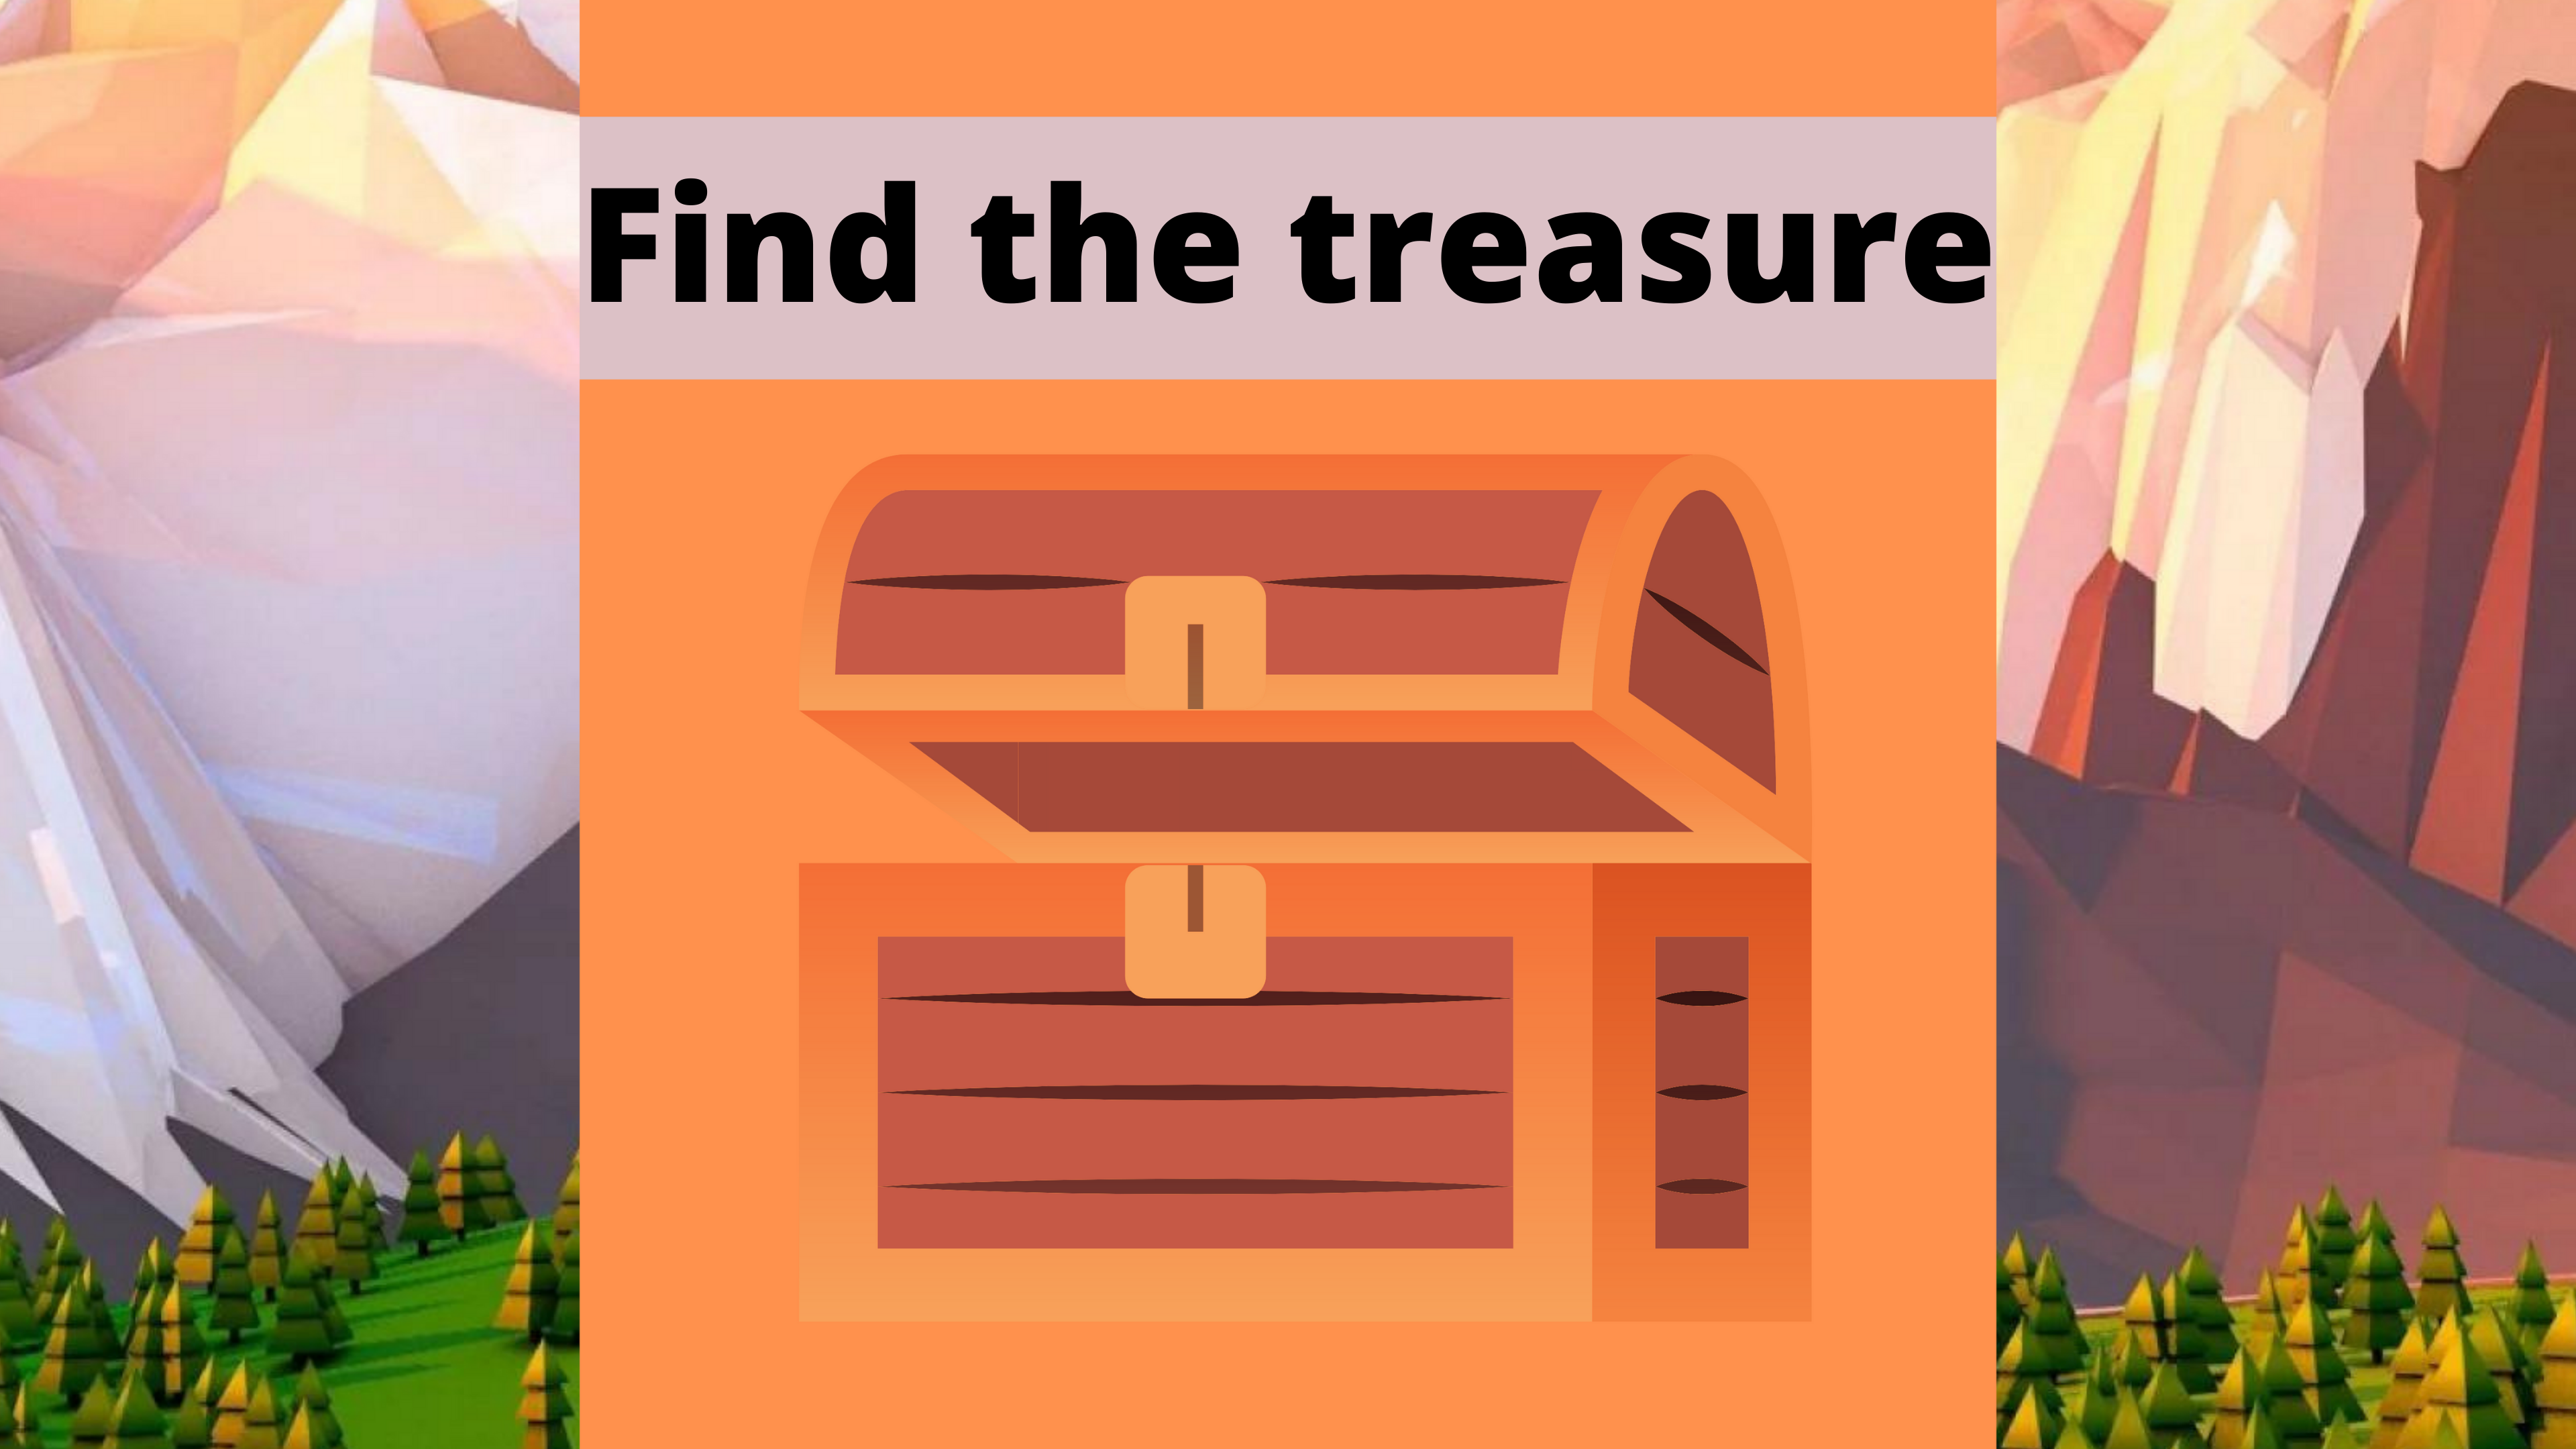 The treasure hunt of doom